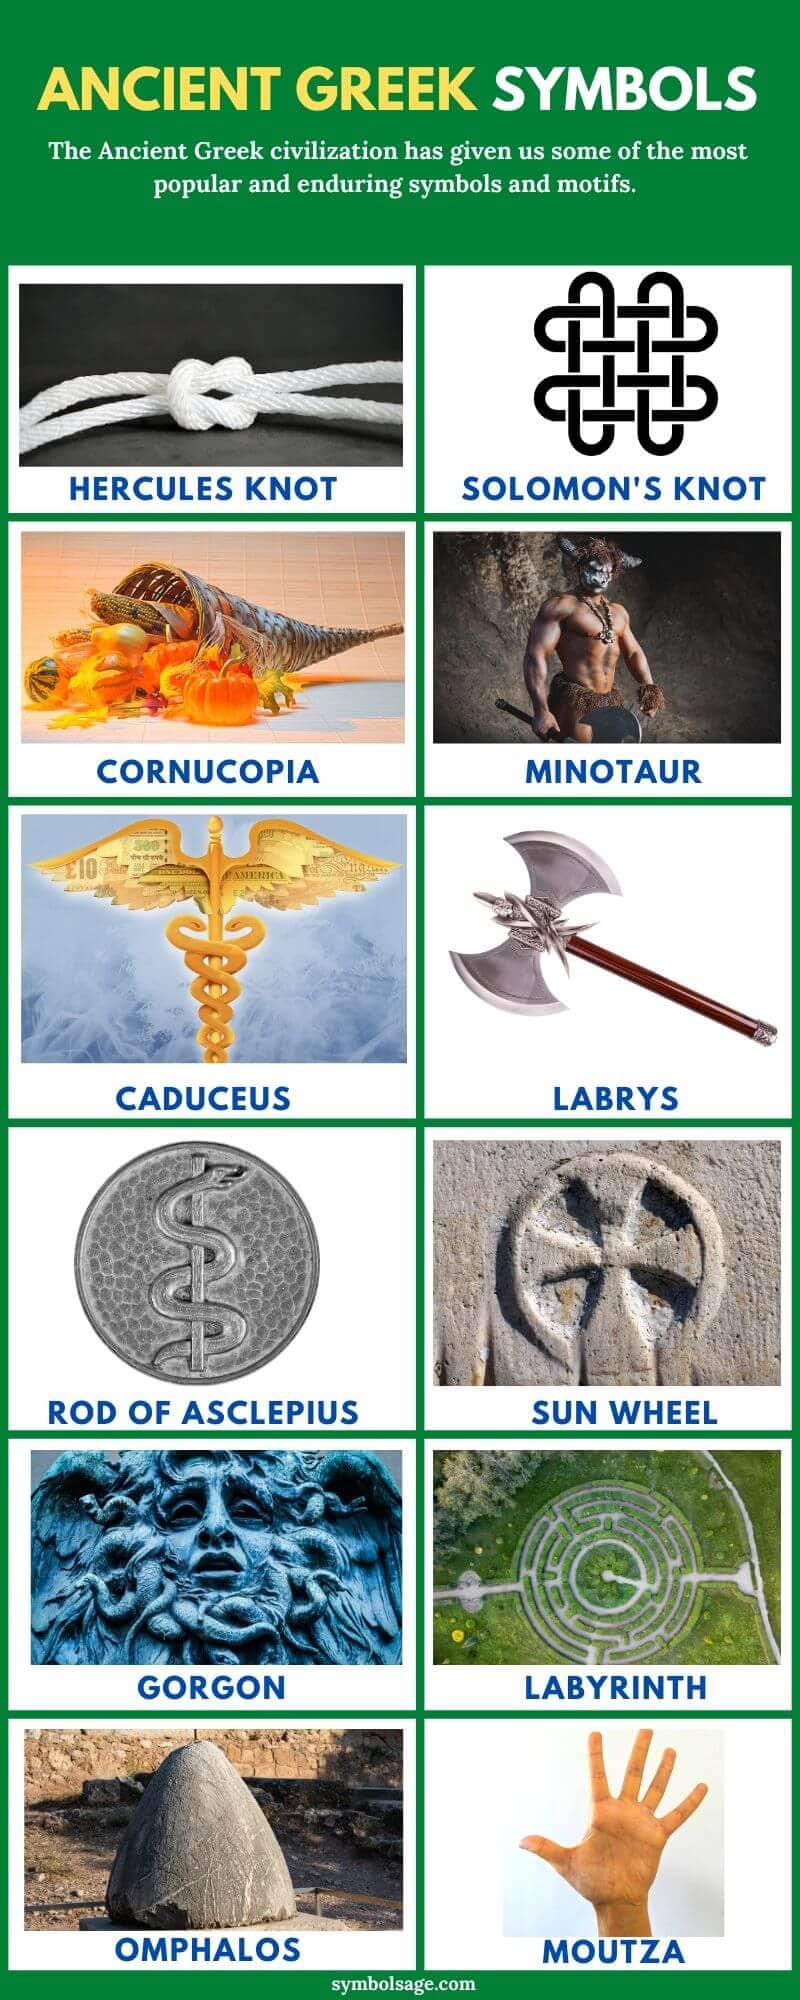 Ancient Greek symbols list